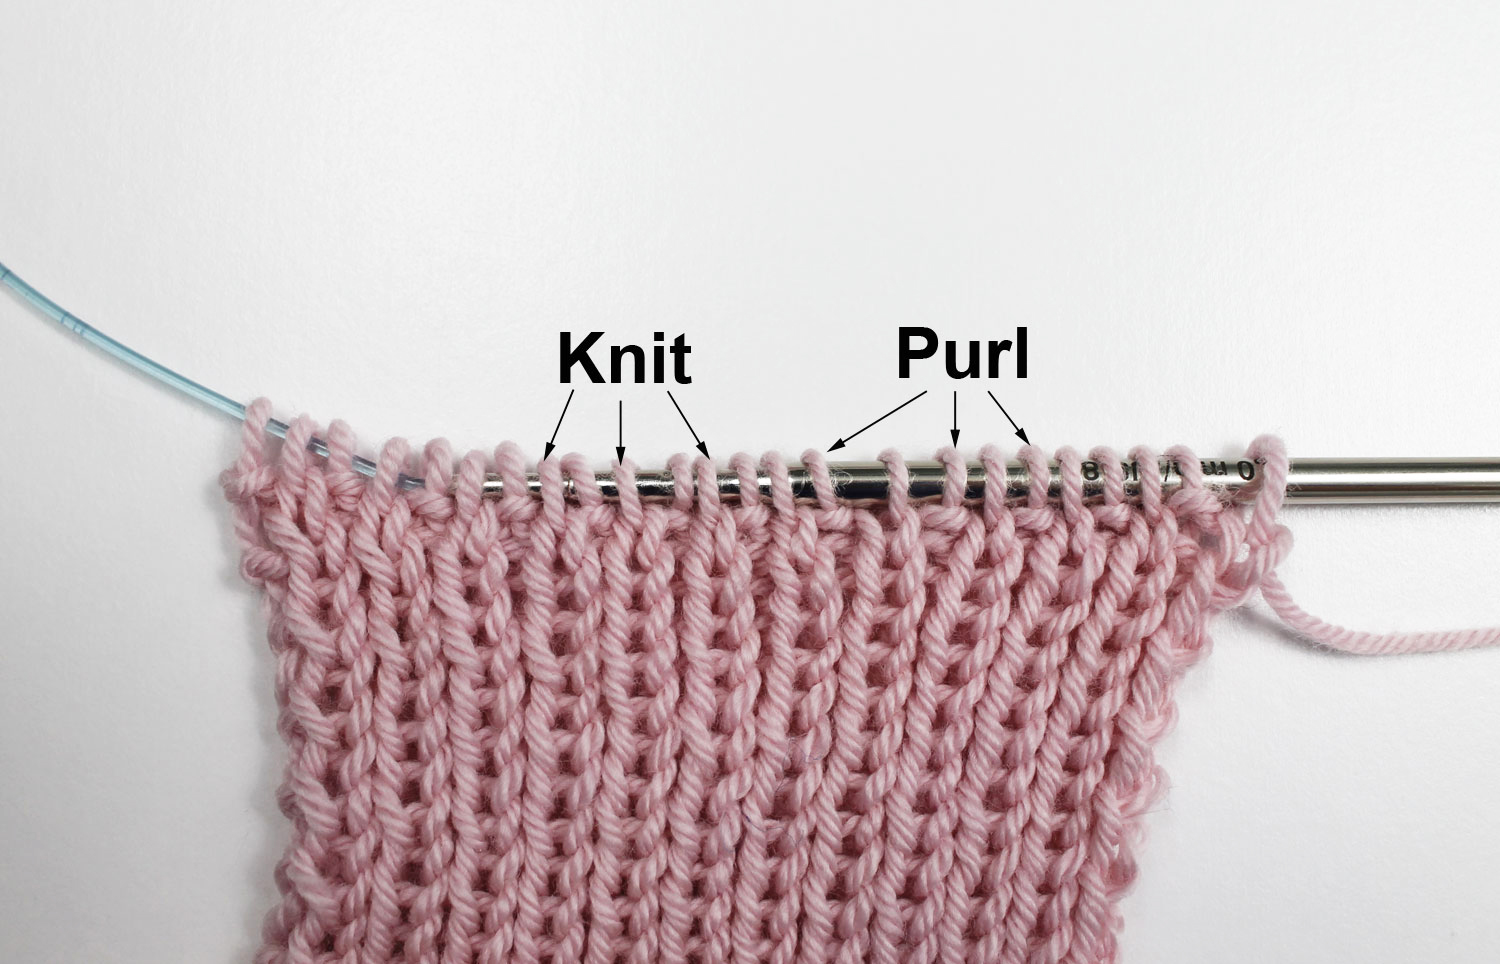 Knit and purl rib